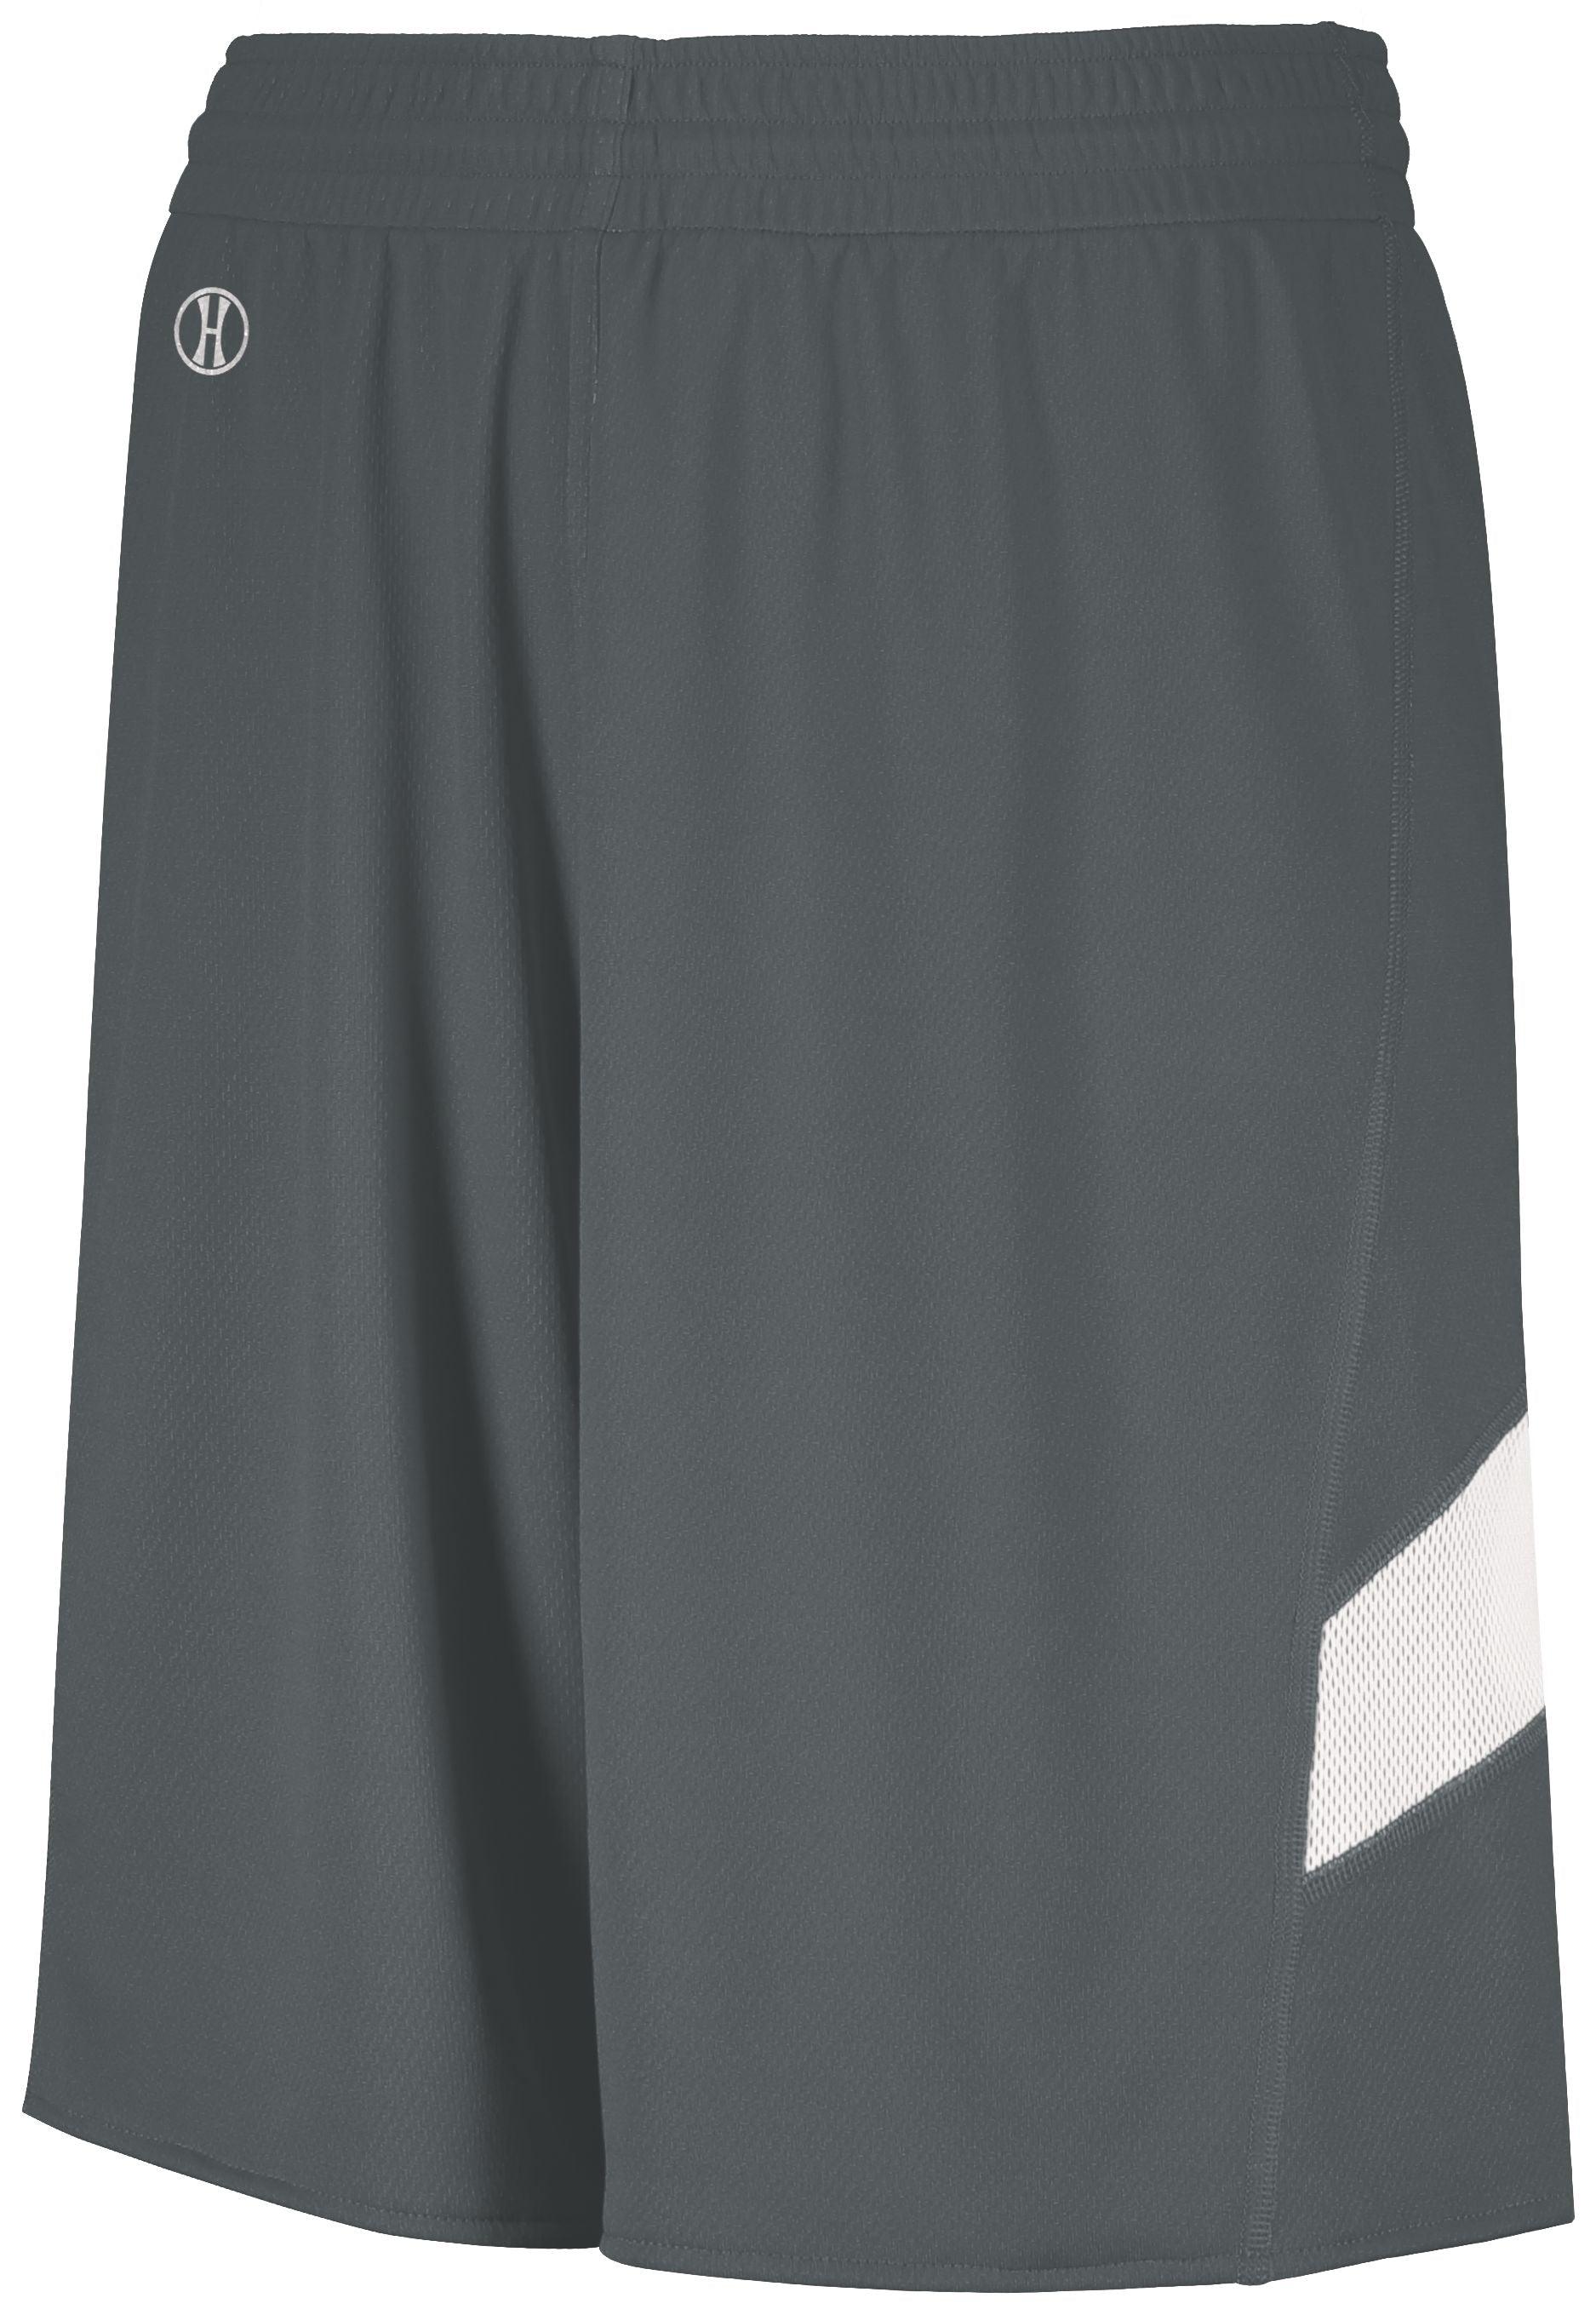 Dual-Side Single Ply Shorts - Dresses Max